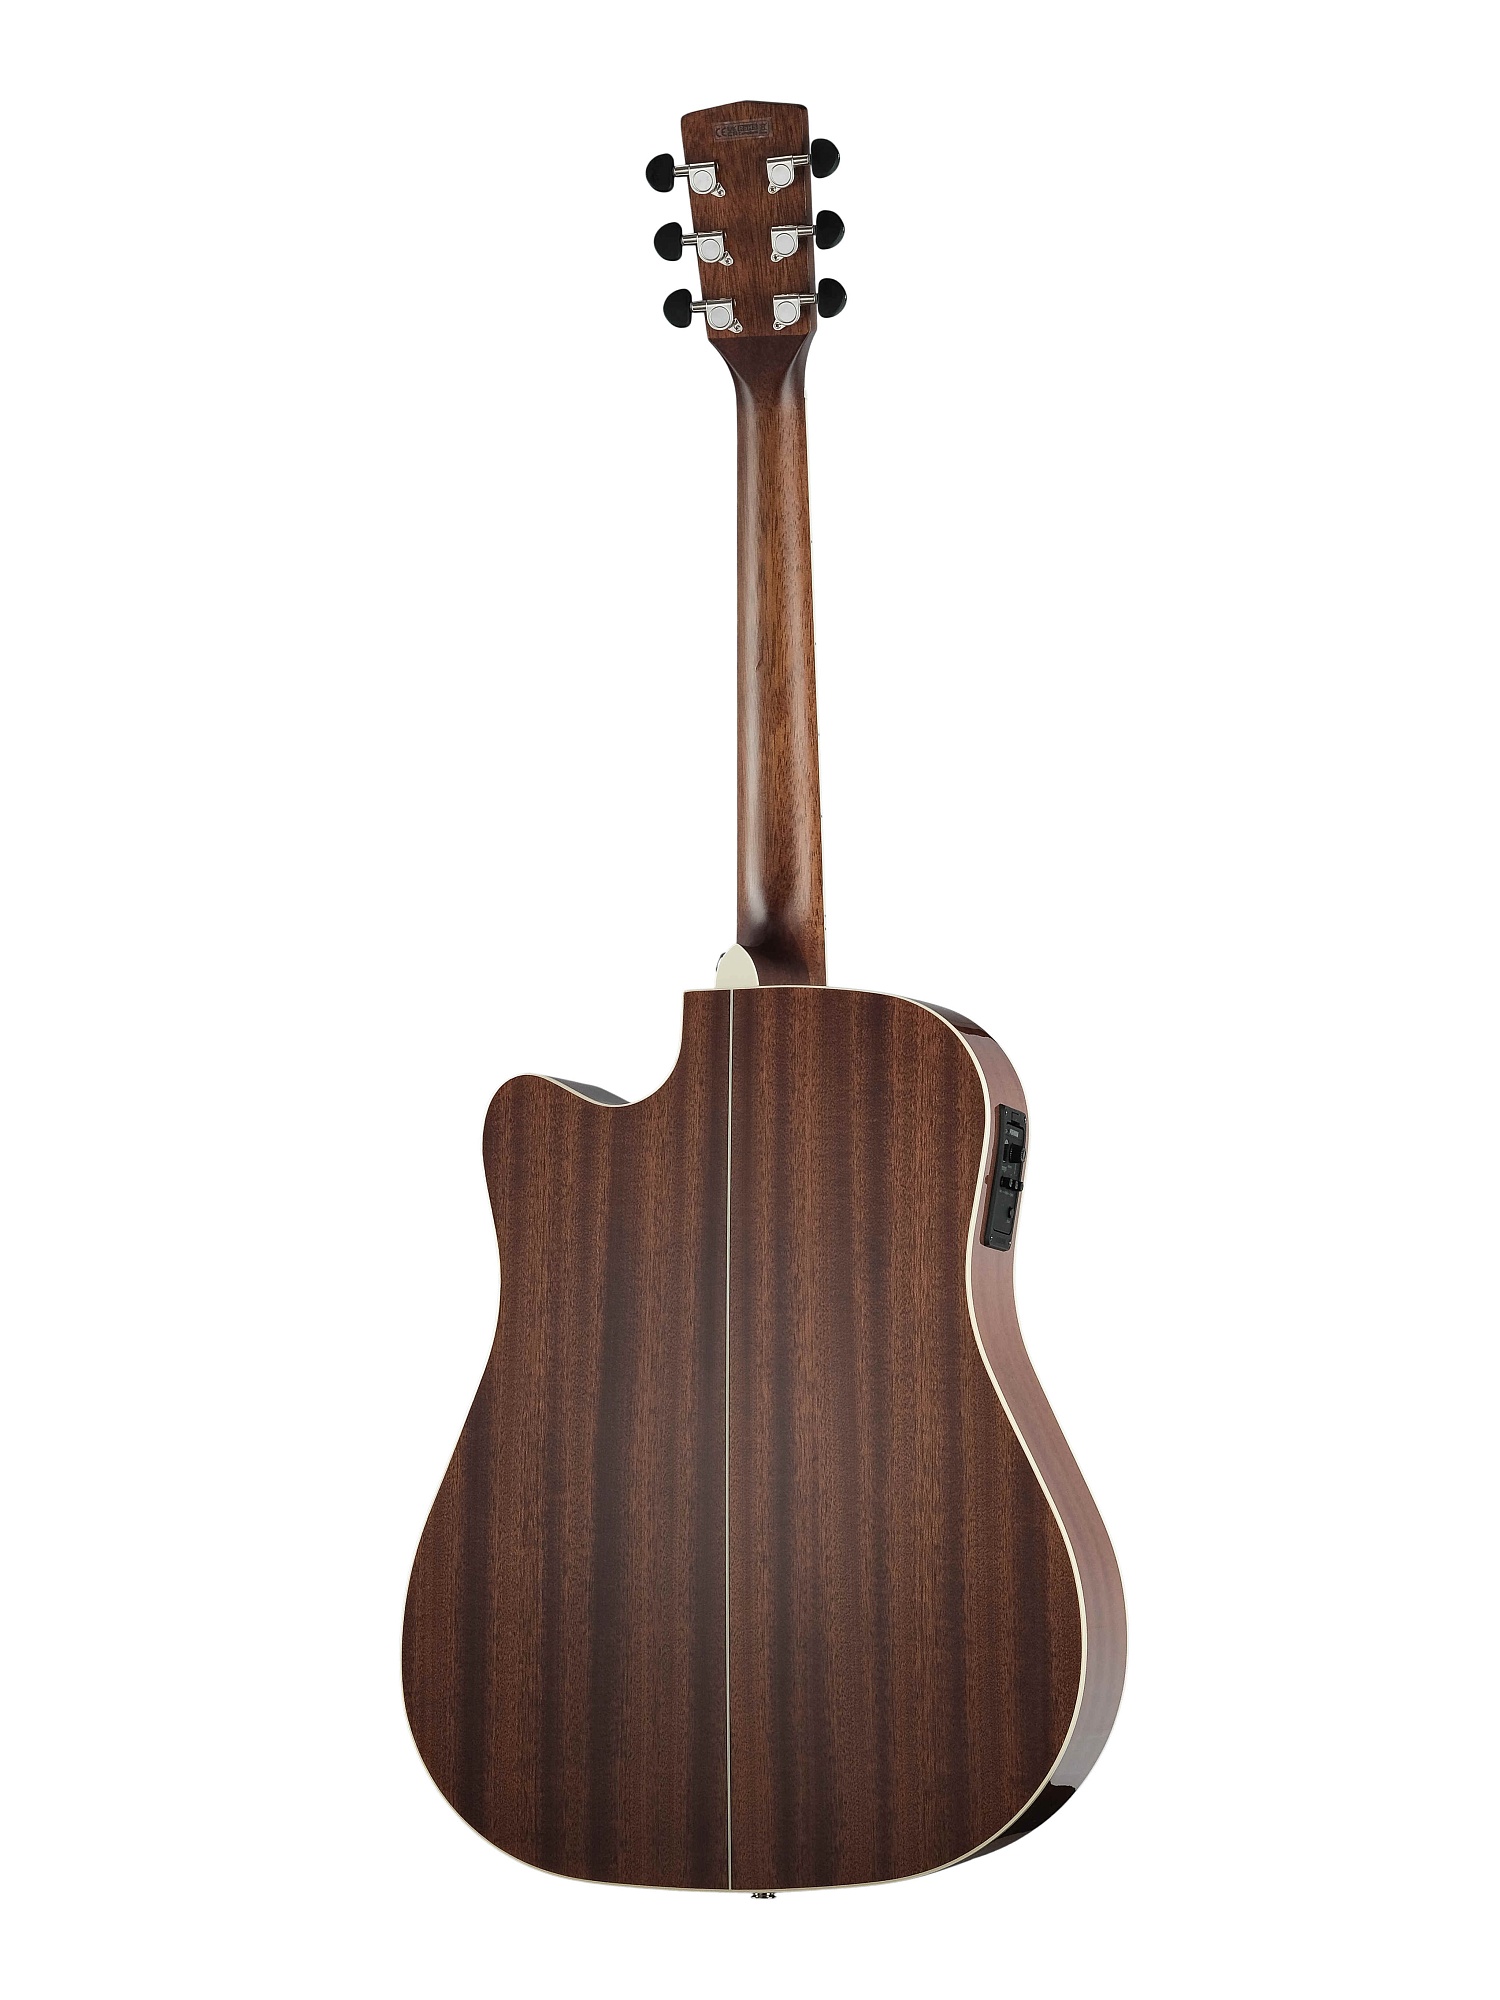 Mr 710. Core-ga-ABW-OPLB Core Series электро-акустическая гитара, с чехлом, Cort. Cort mr710f-MD-Nat.